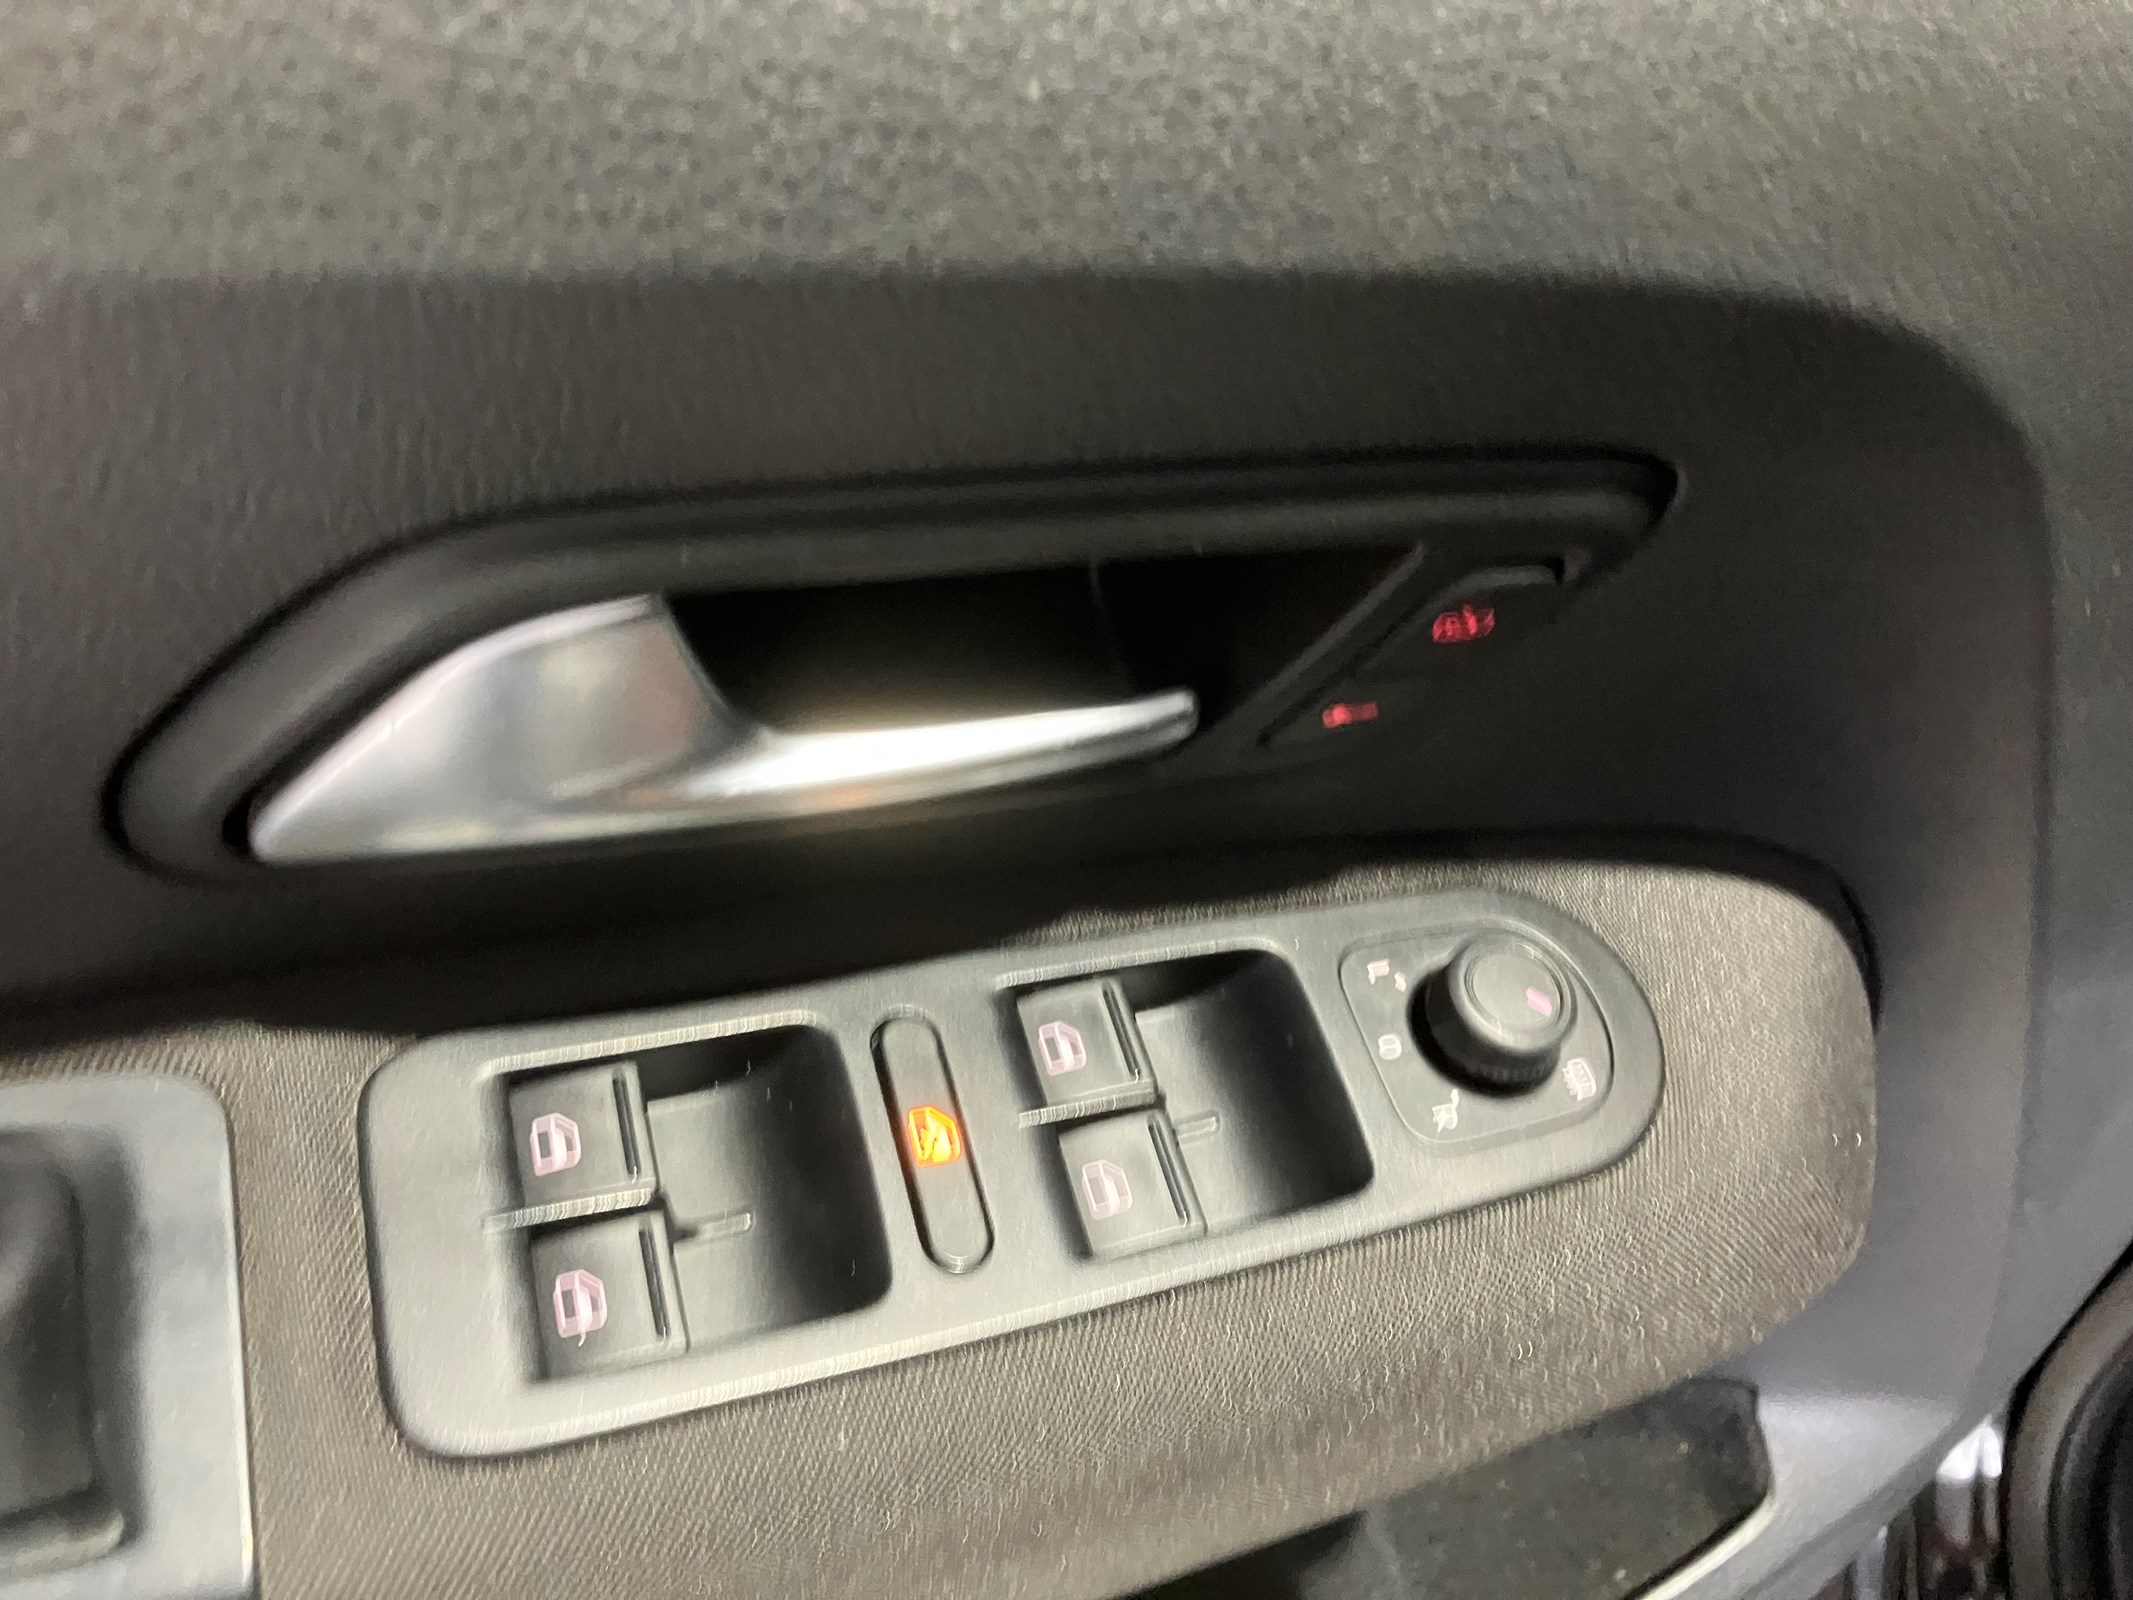 VW Amarok 3.0TDI Comfortline 4Motion Automatic